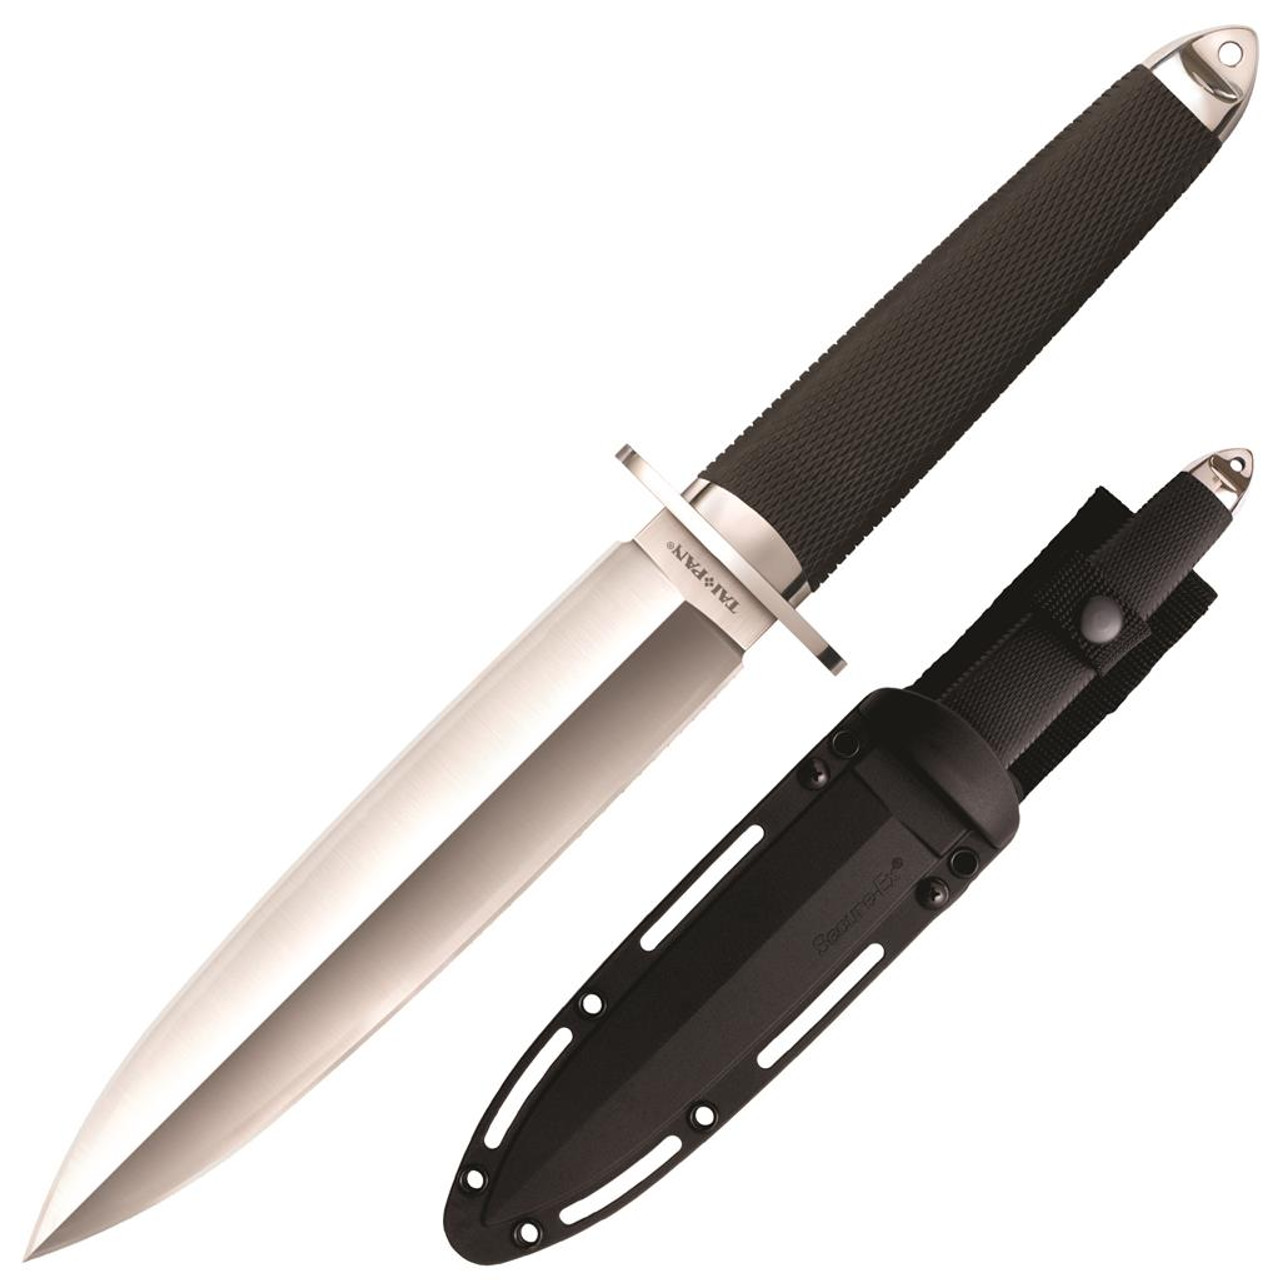 TAI PAN (VG-10 SAN MAI) | Cold Steel Knives